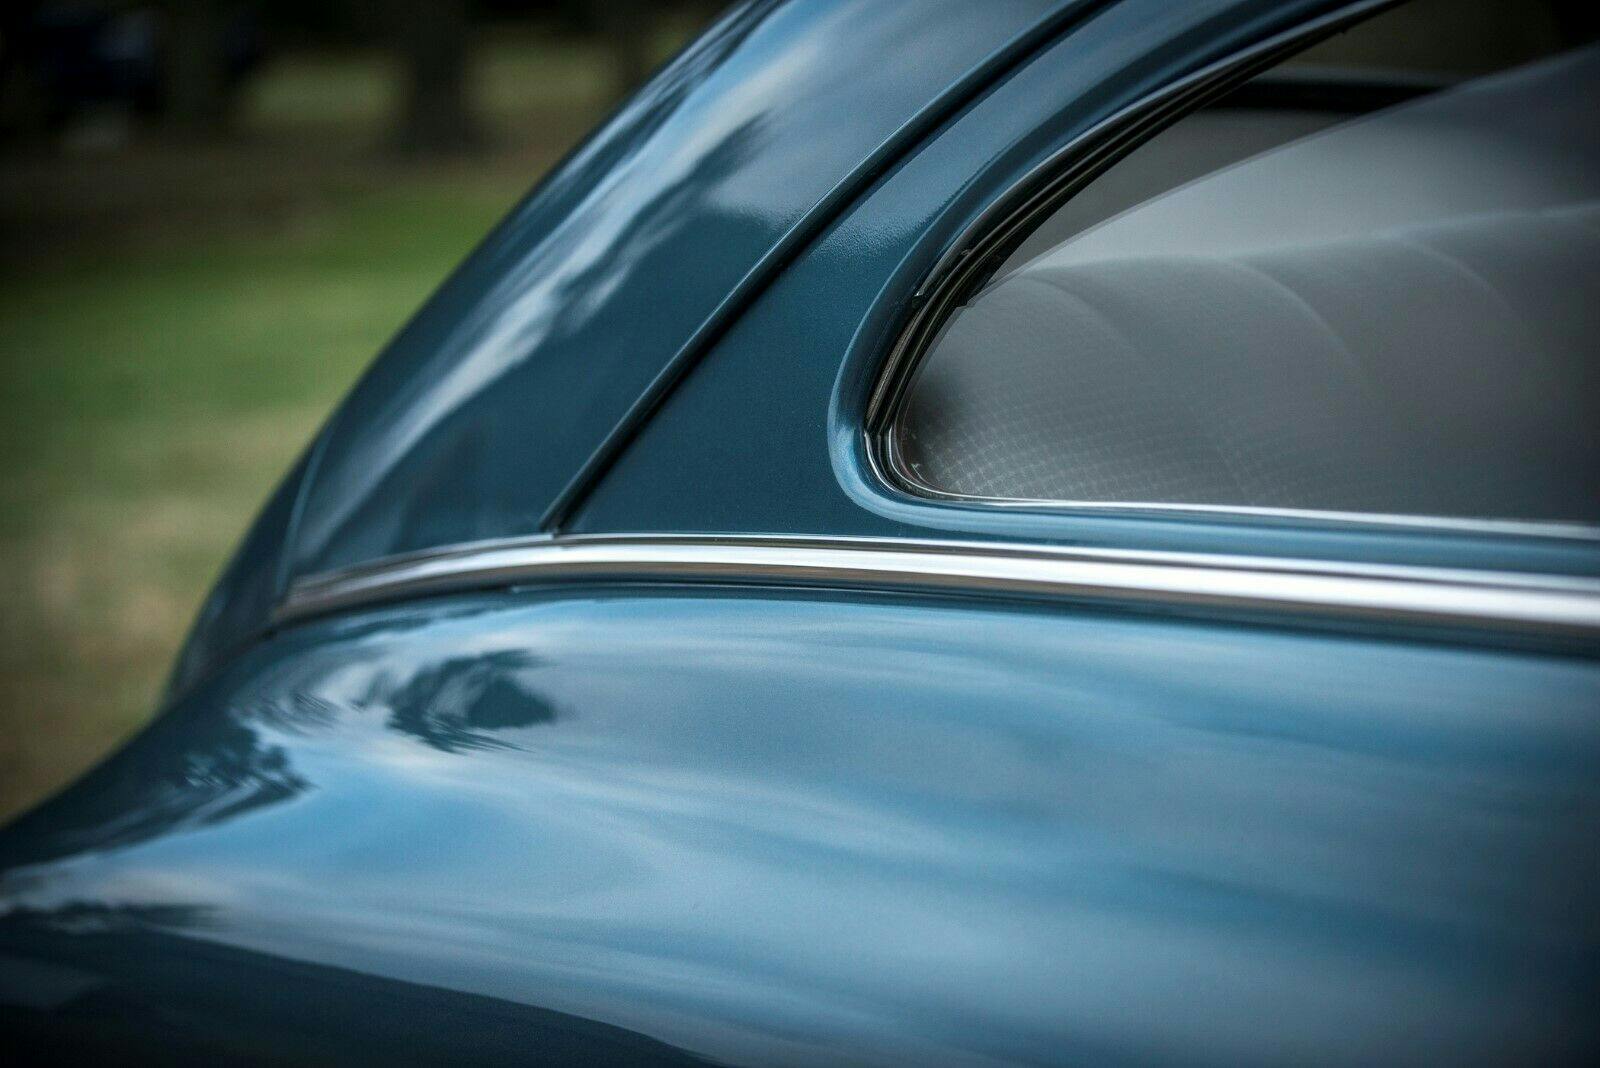 1949 Packard Deluxe Club Sedan - Close-up rear passenger window